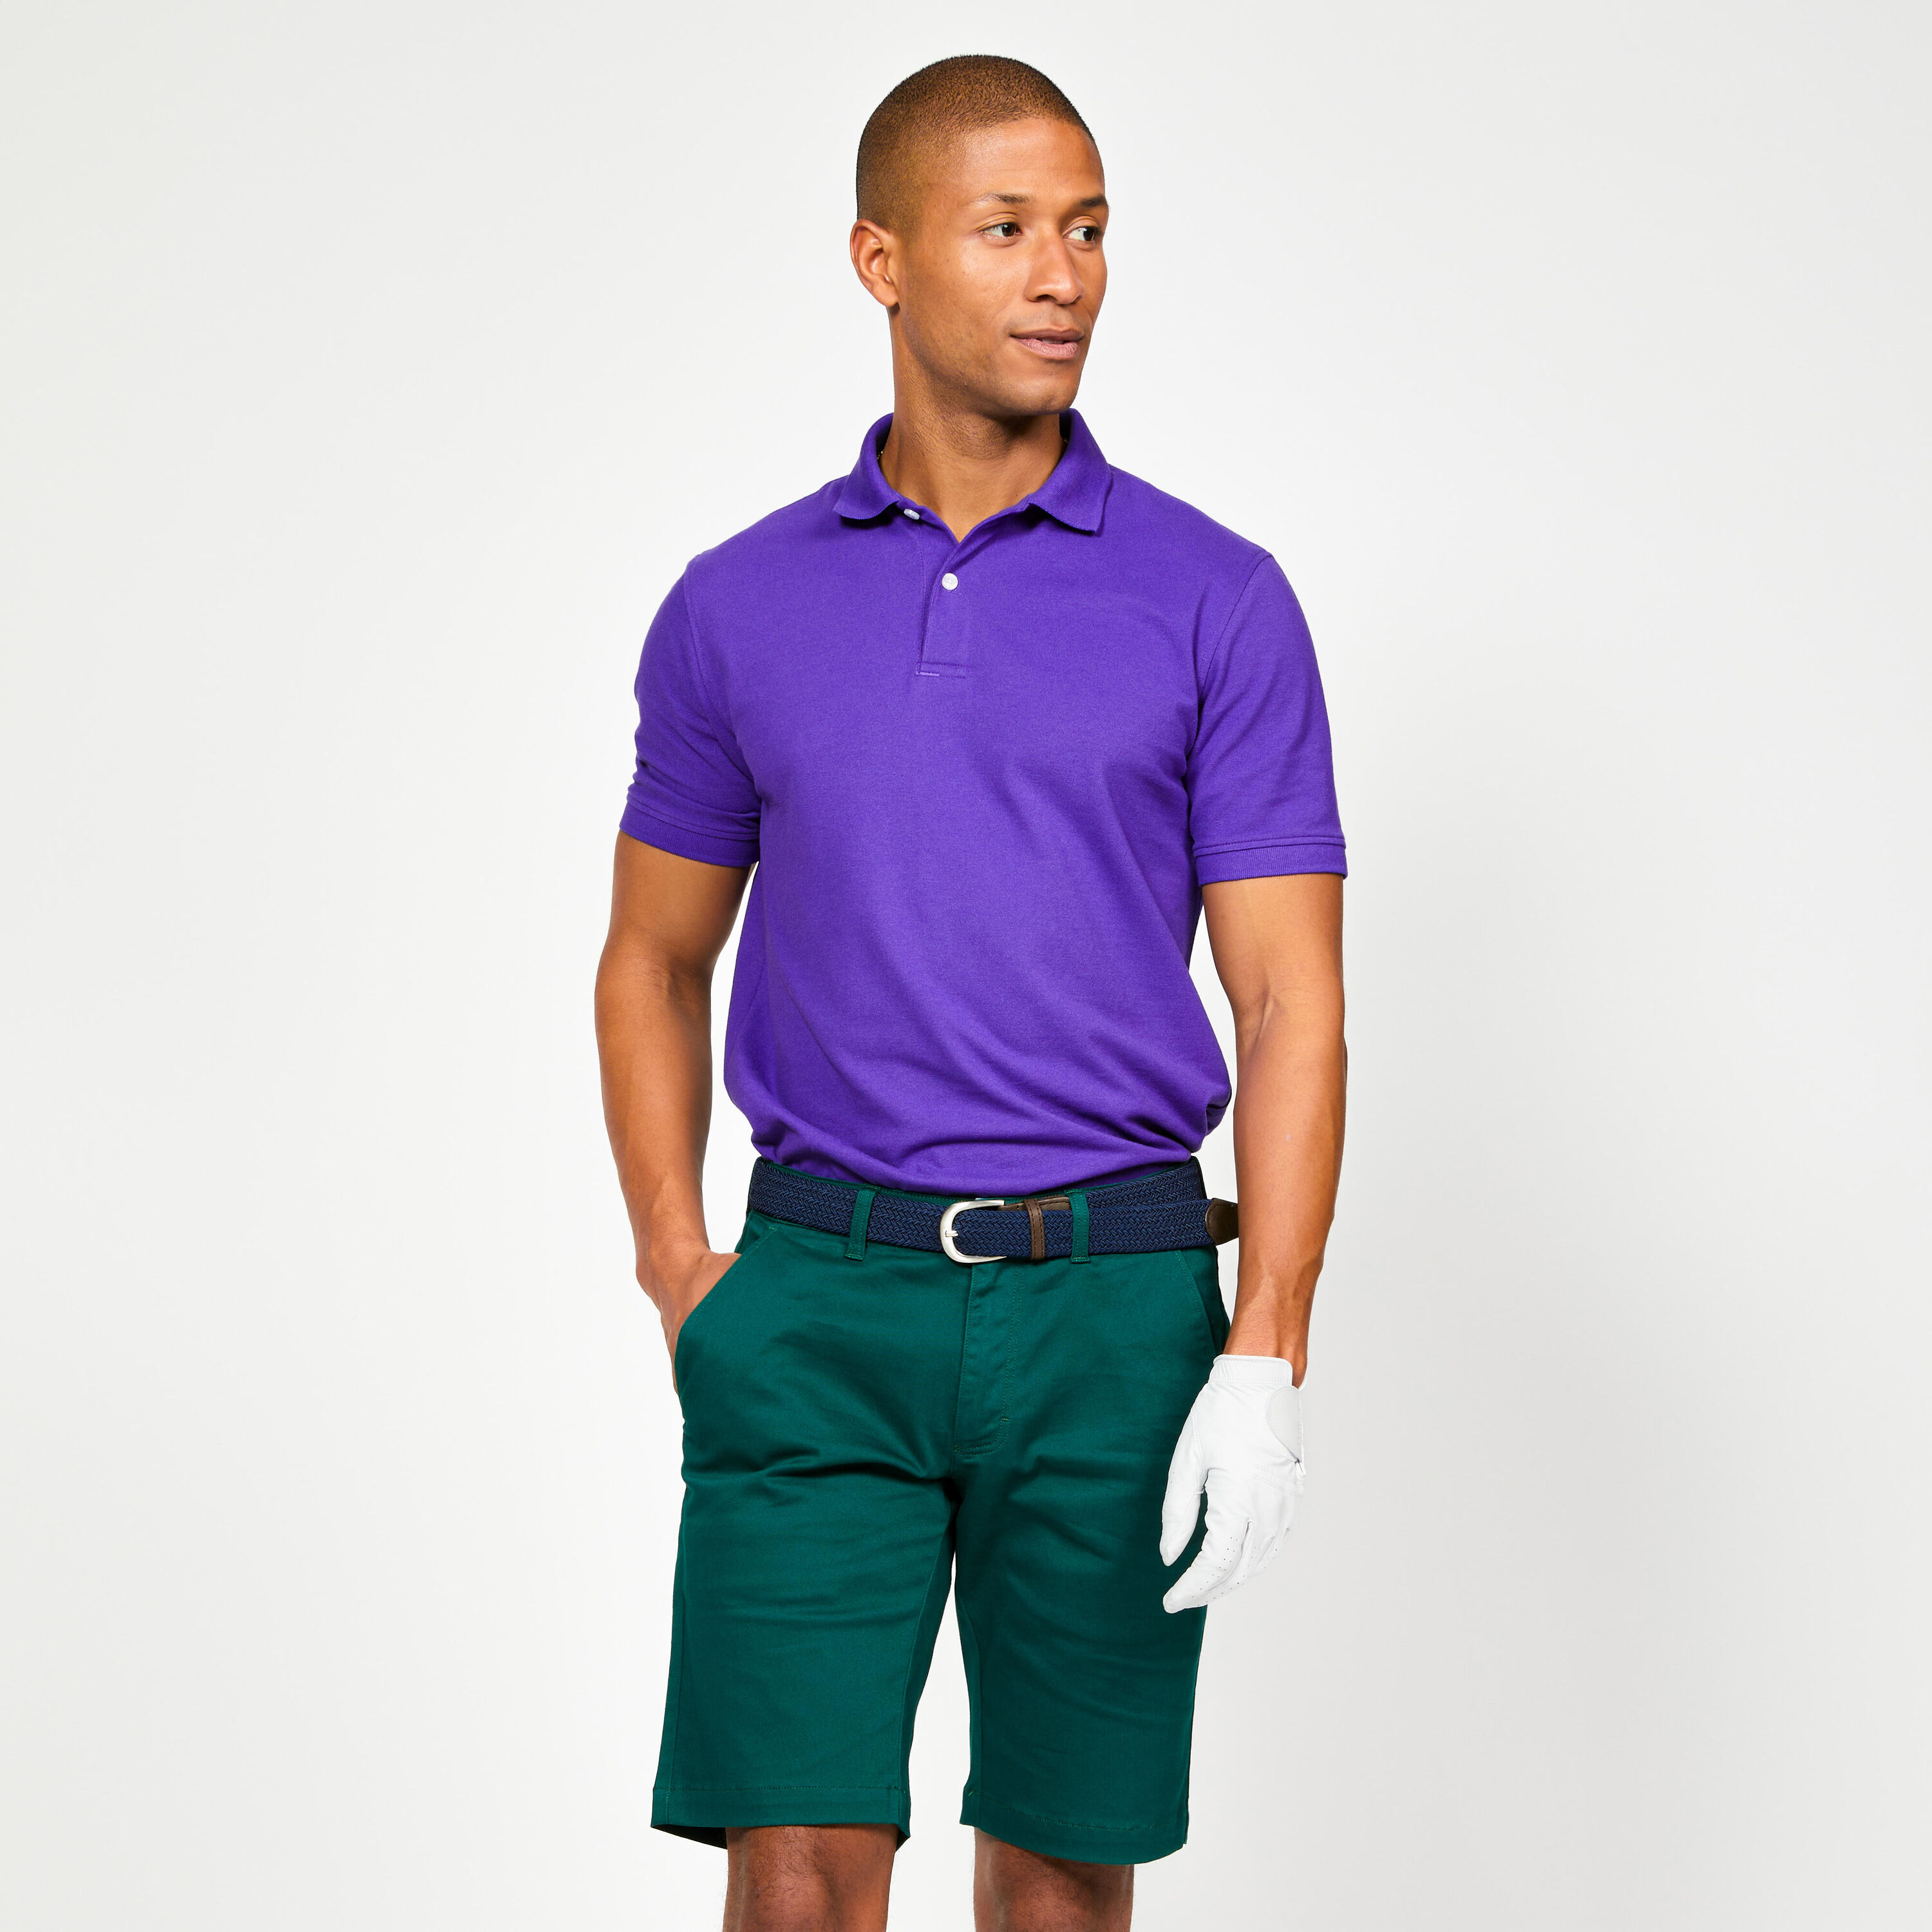 INESIS Men's short-sleeved golf polo shirt - MW500 lavender